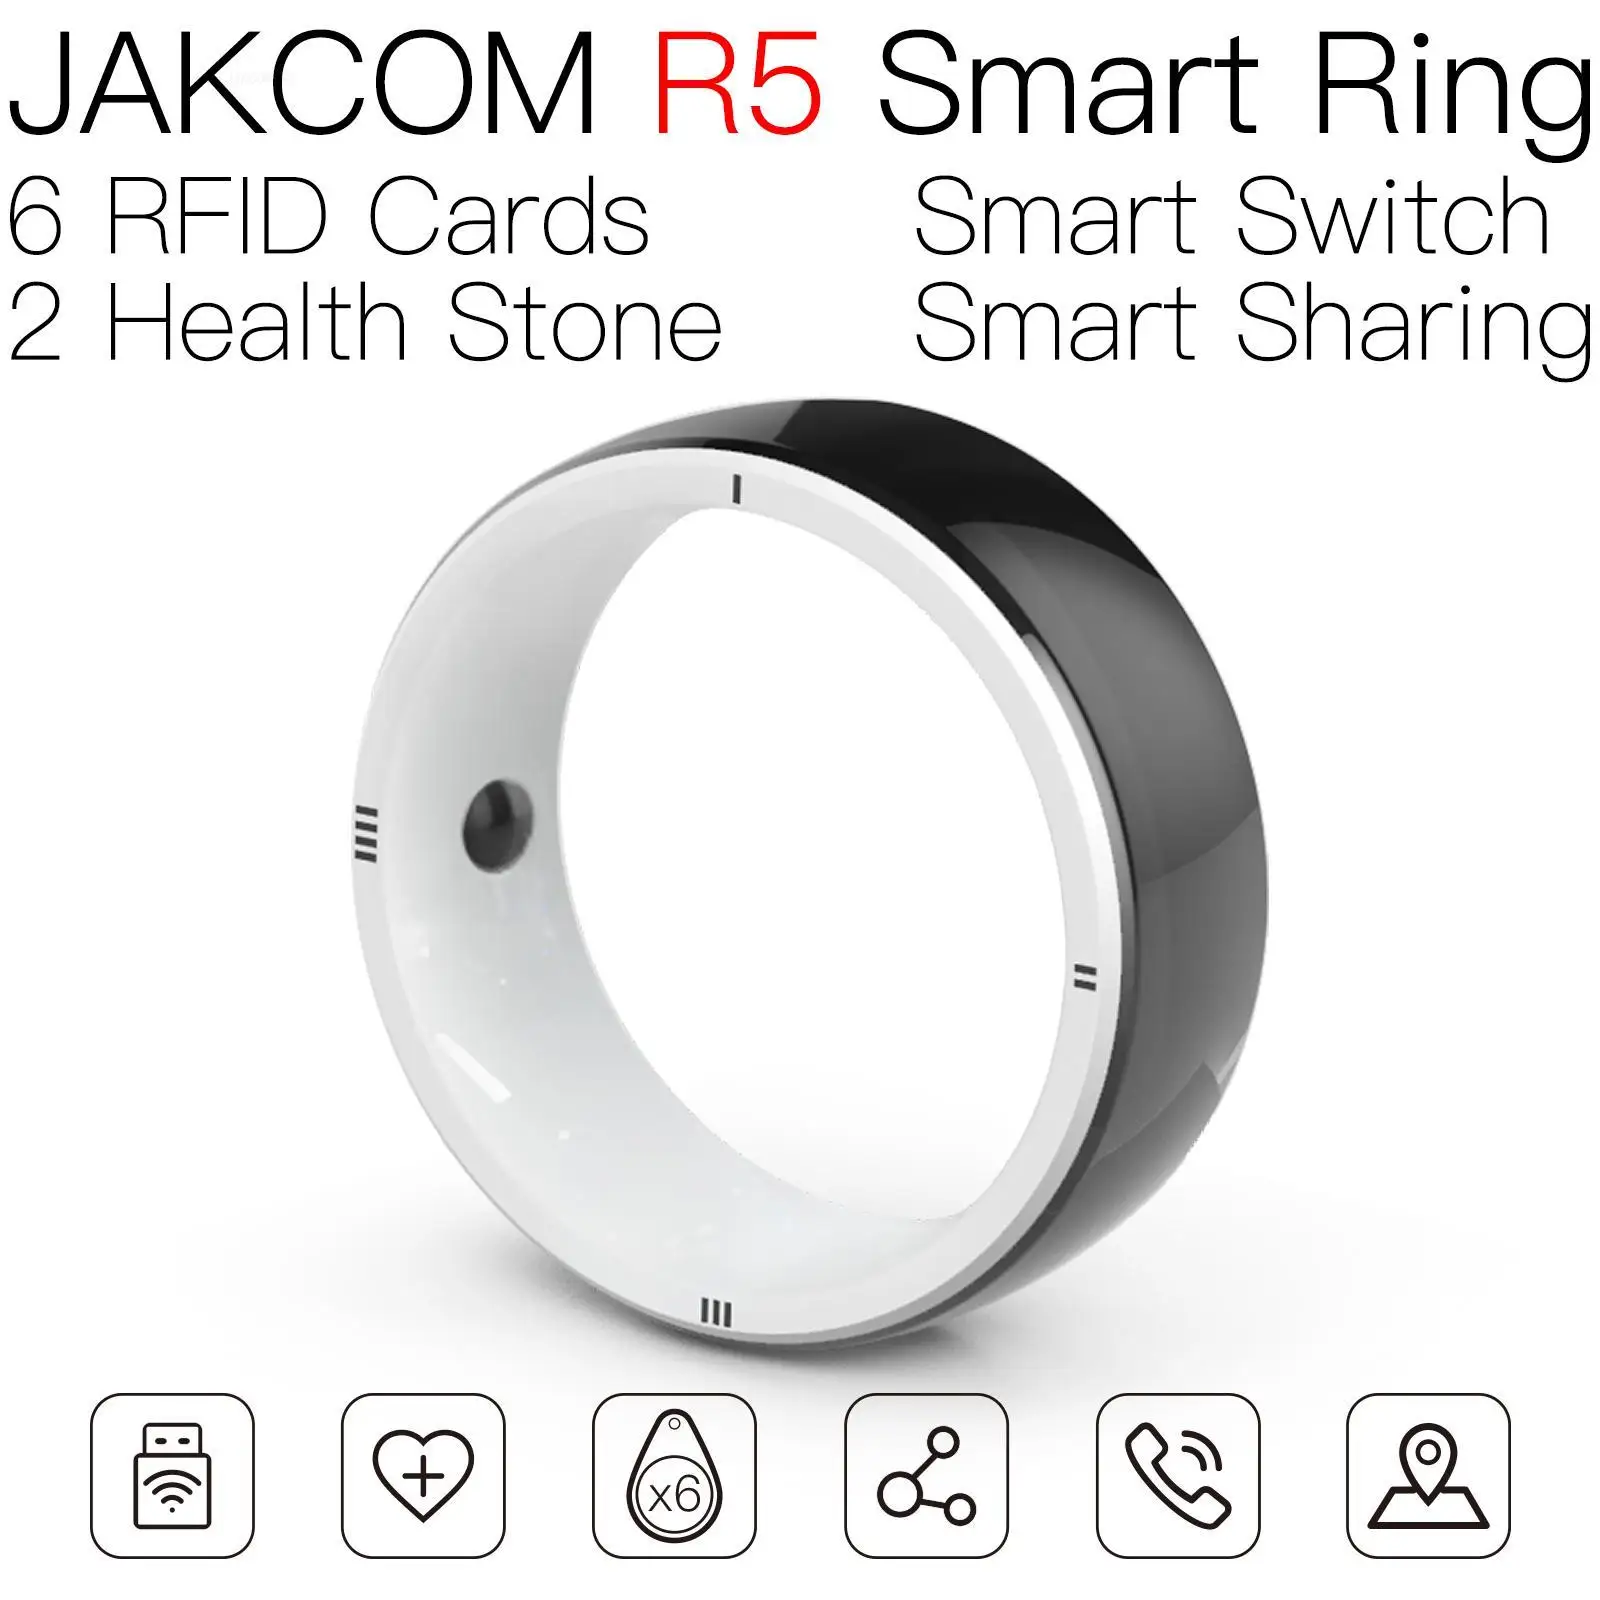 

JAKCOM R5 Smart Ring Super value as rfid tag 125khz rewritable sticker rg45 nfc reader crossing new horizons carte sd